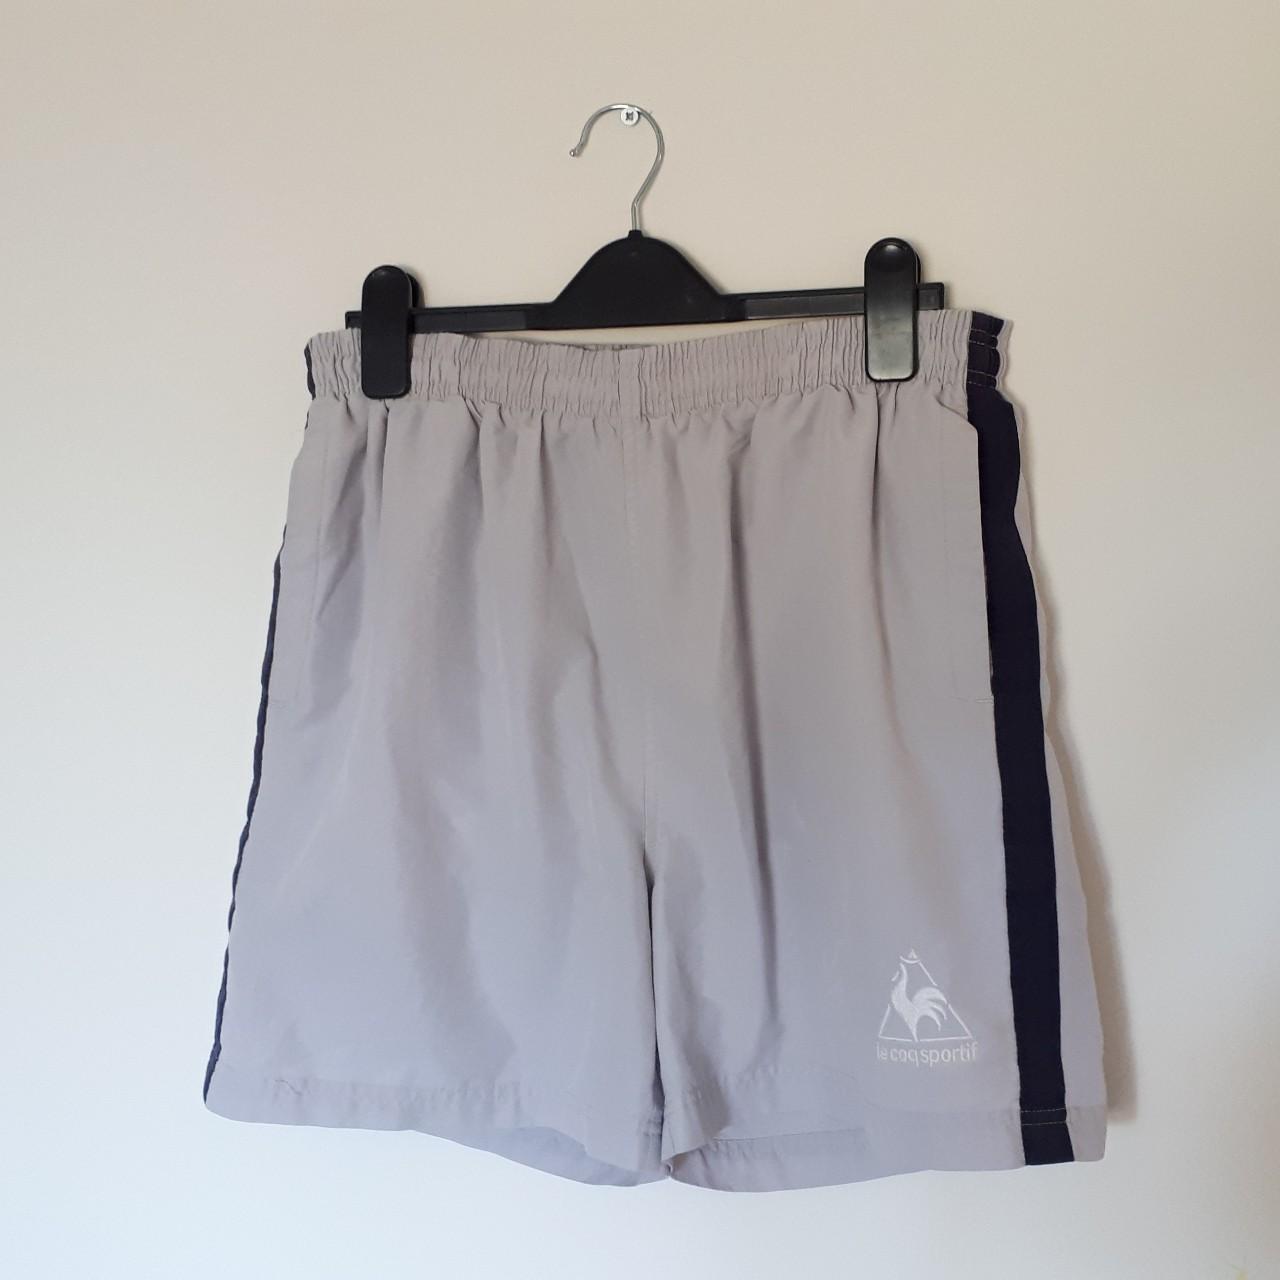 Product Image 1 - Le coq sportif shorts

Light grey